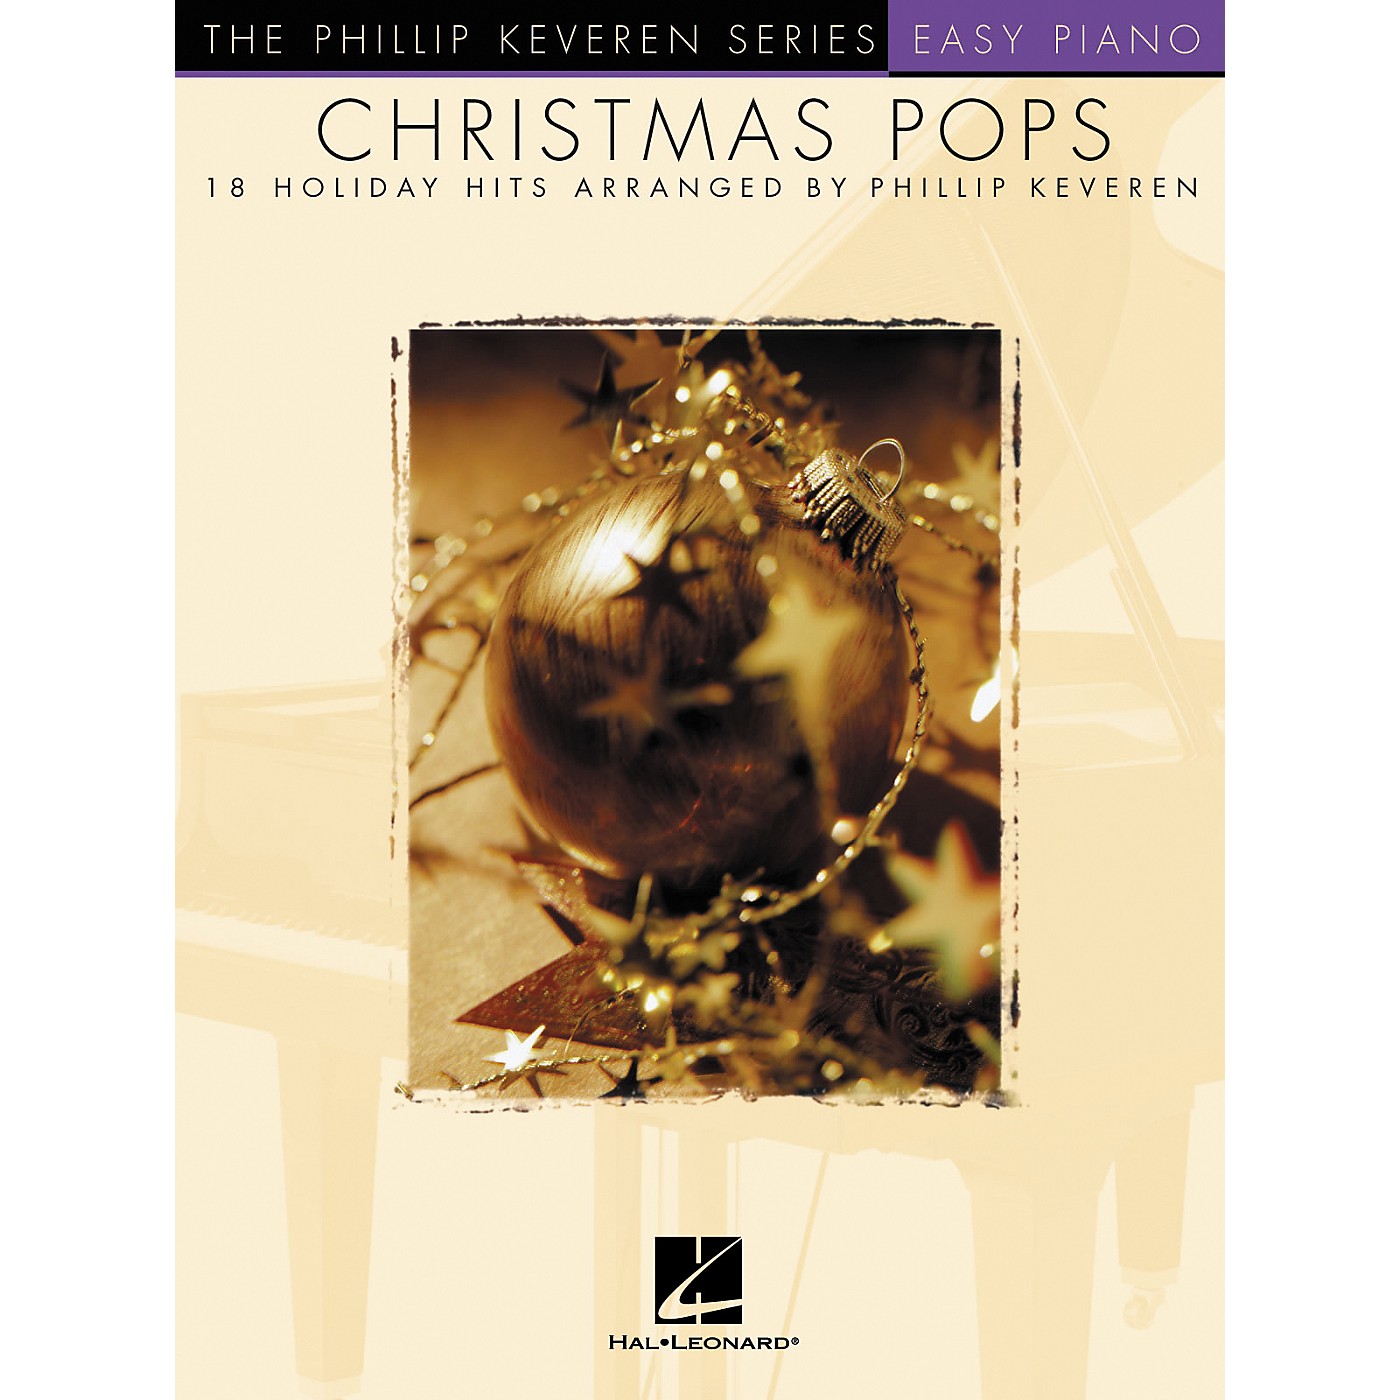 Hal Leonard Christmas Pops (18 Holiday Hits) - Phillip Keveren Series For Easy Piano thumbnail